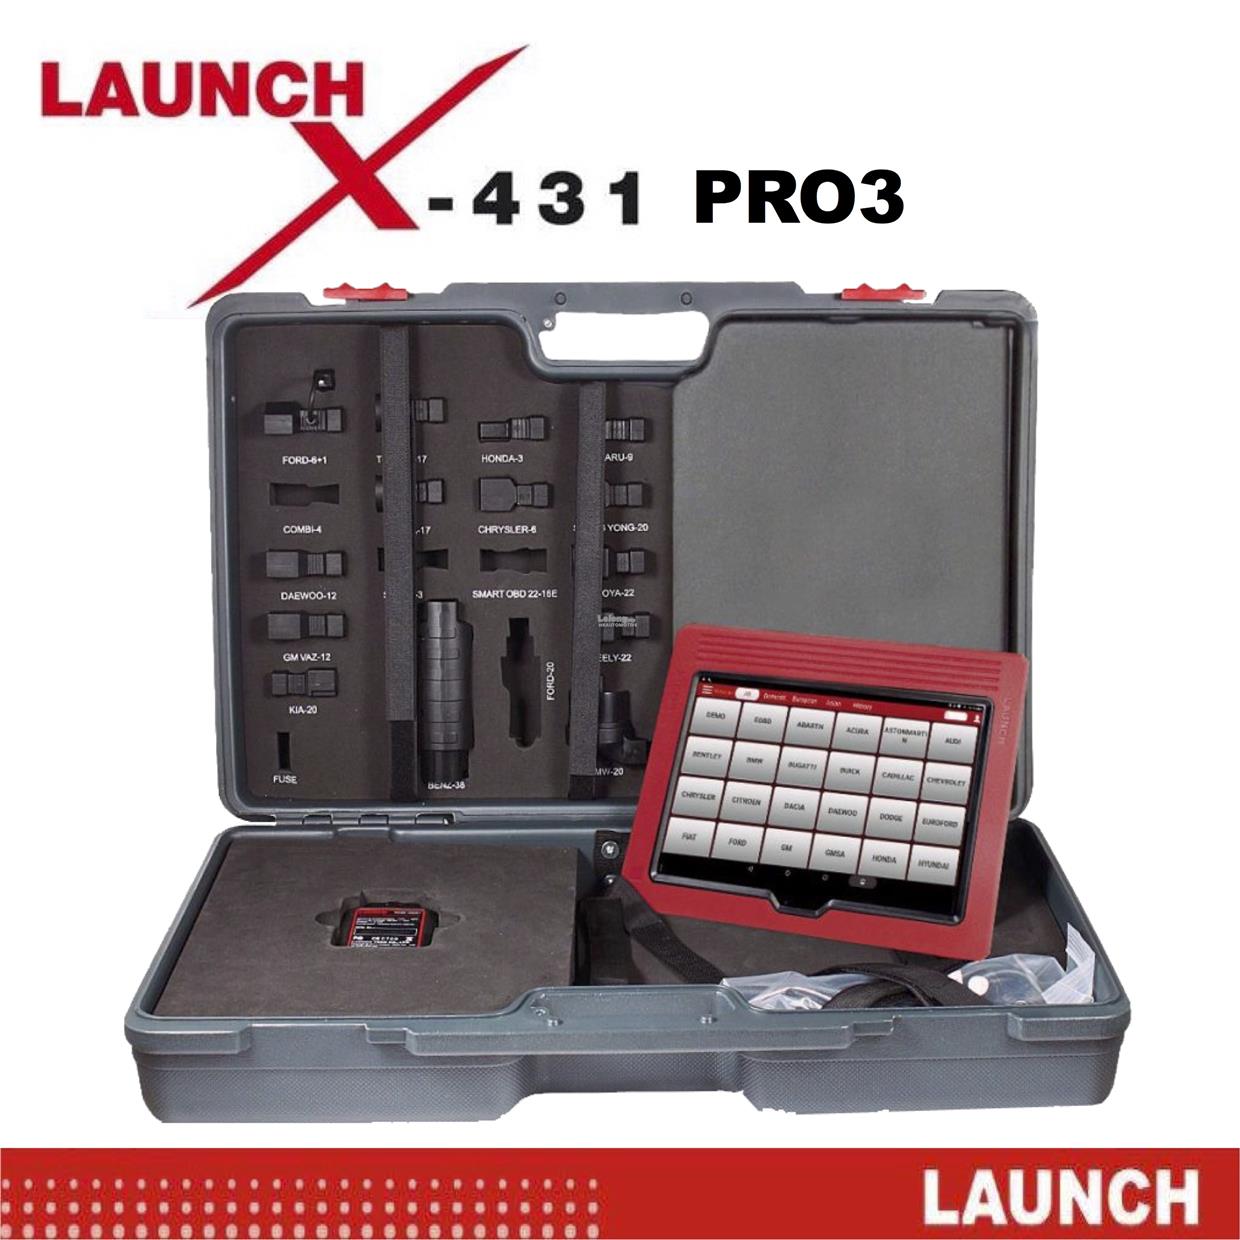 launch x431 pro 3 user manual